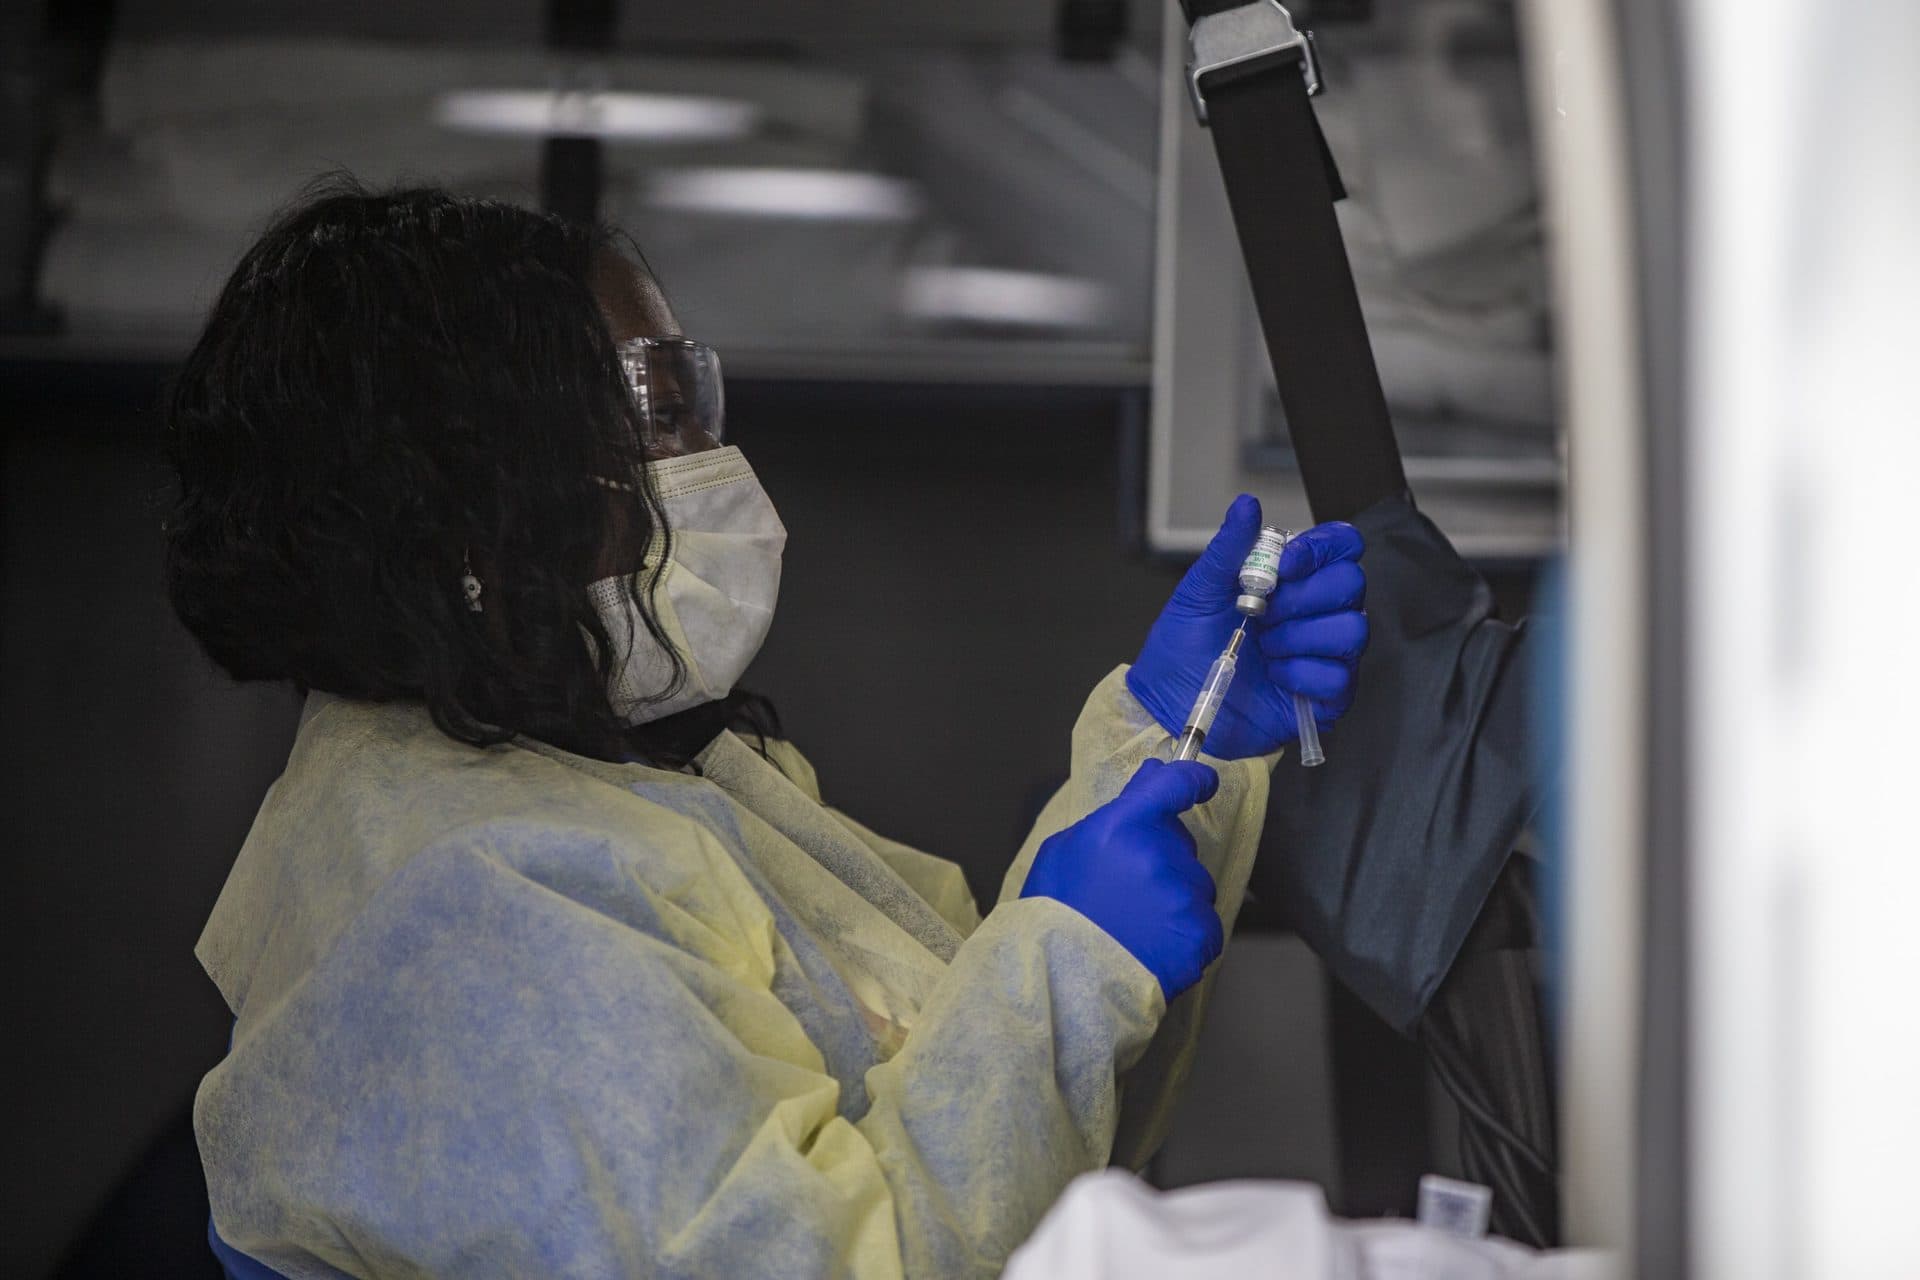 BMC nurse Priscilla Stout prepares an inoculation in the back of the ambulance. (Jesse Costa/WBUR)